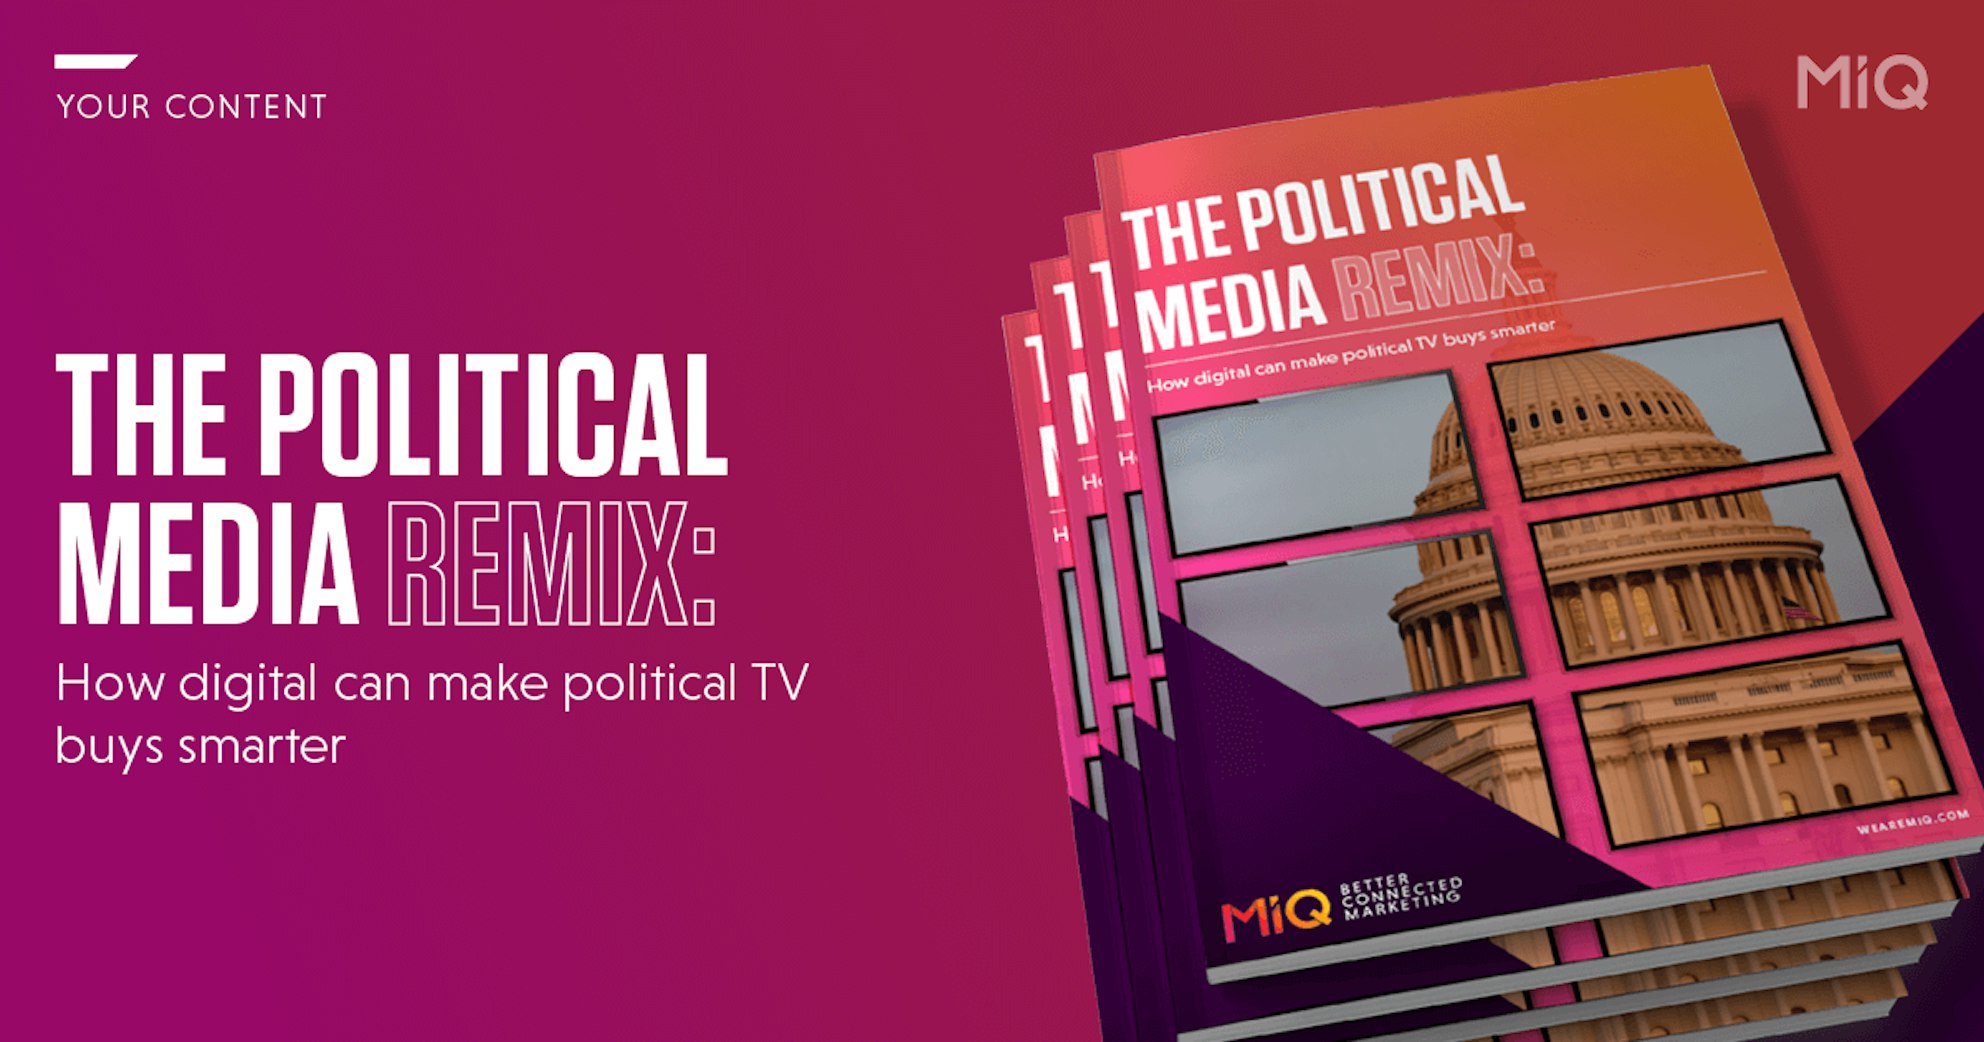 The political media remix: how digital can make political TV buys smarter